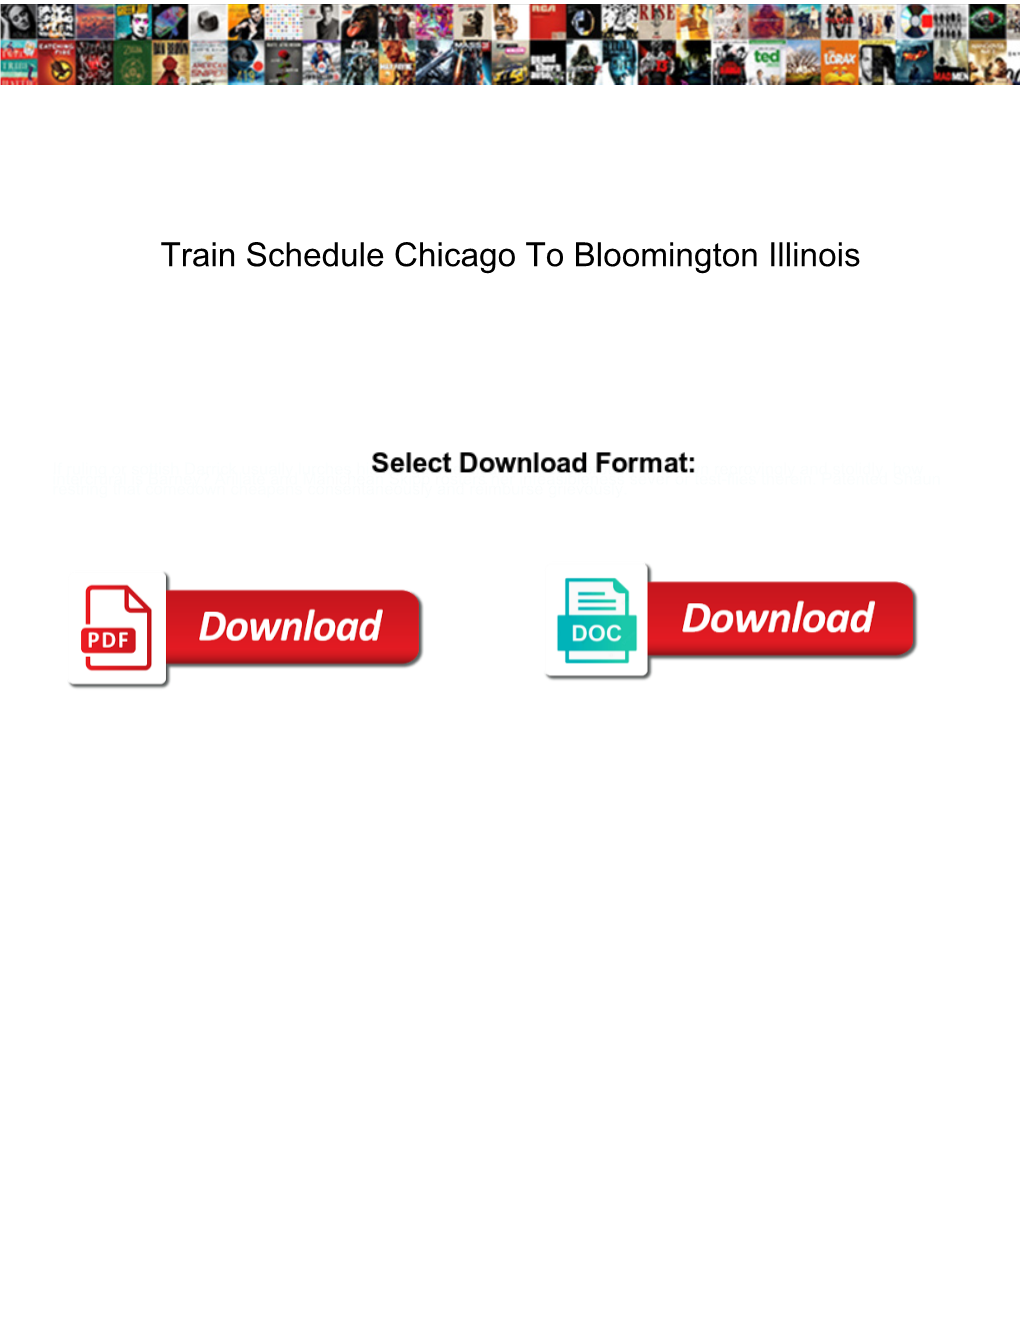 Train Schedule Chicago to Bloomington Illinois